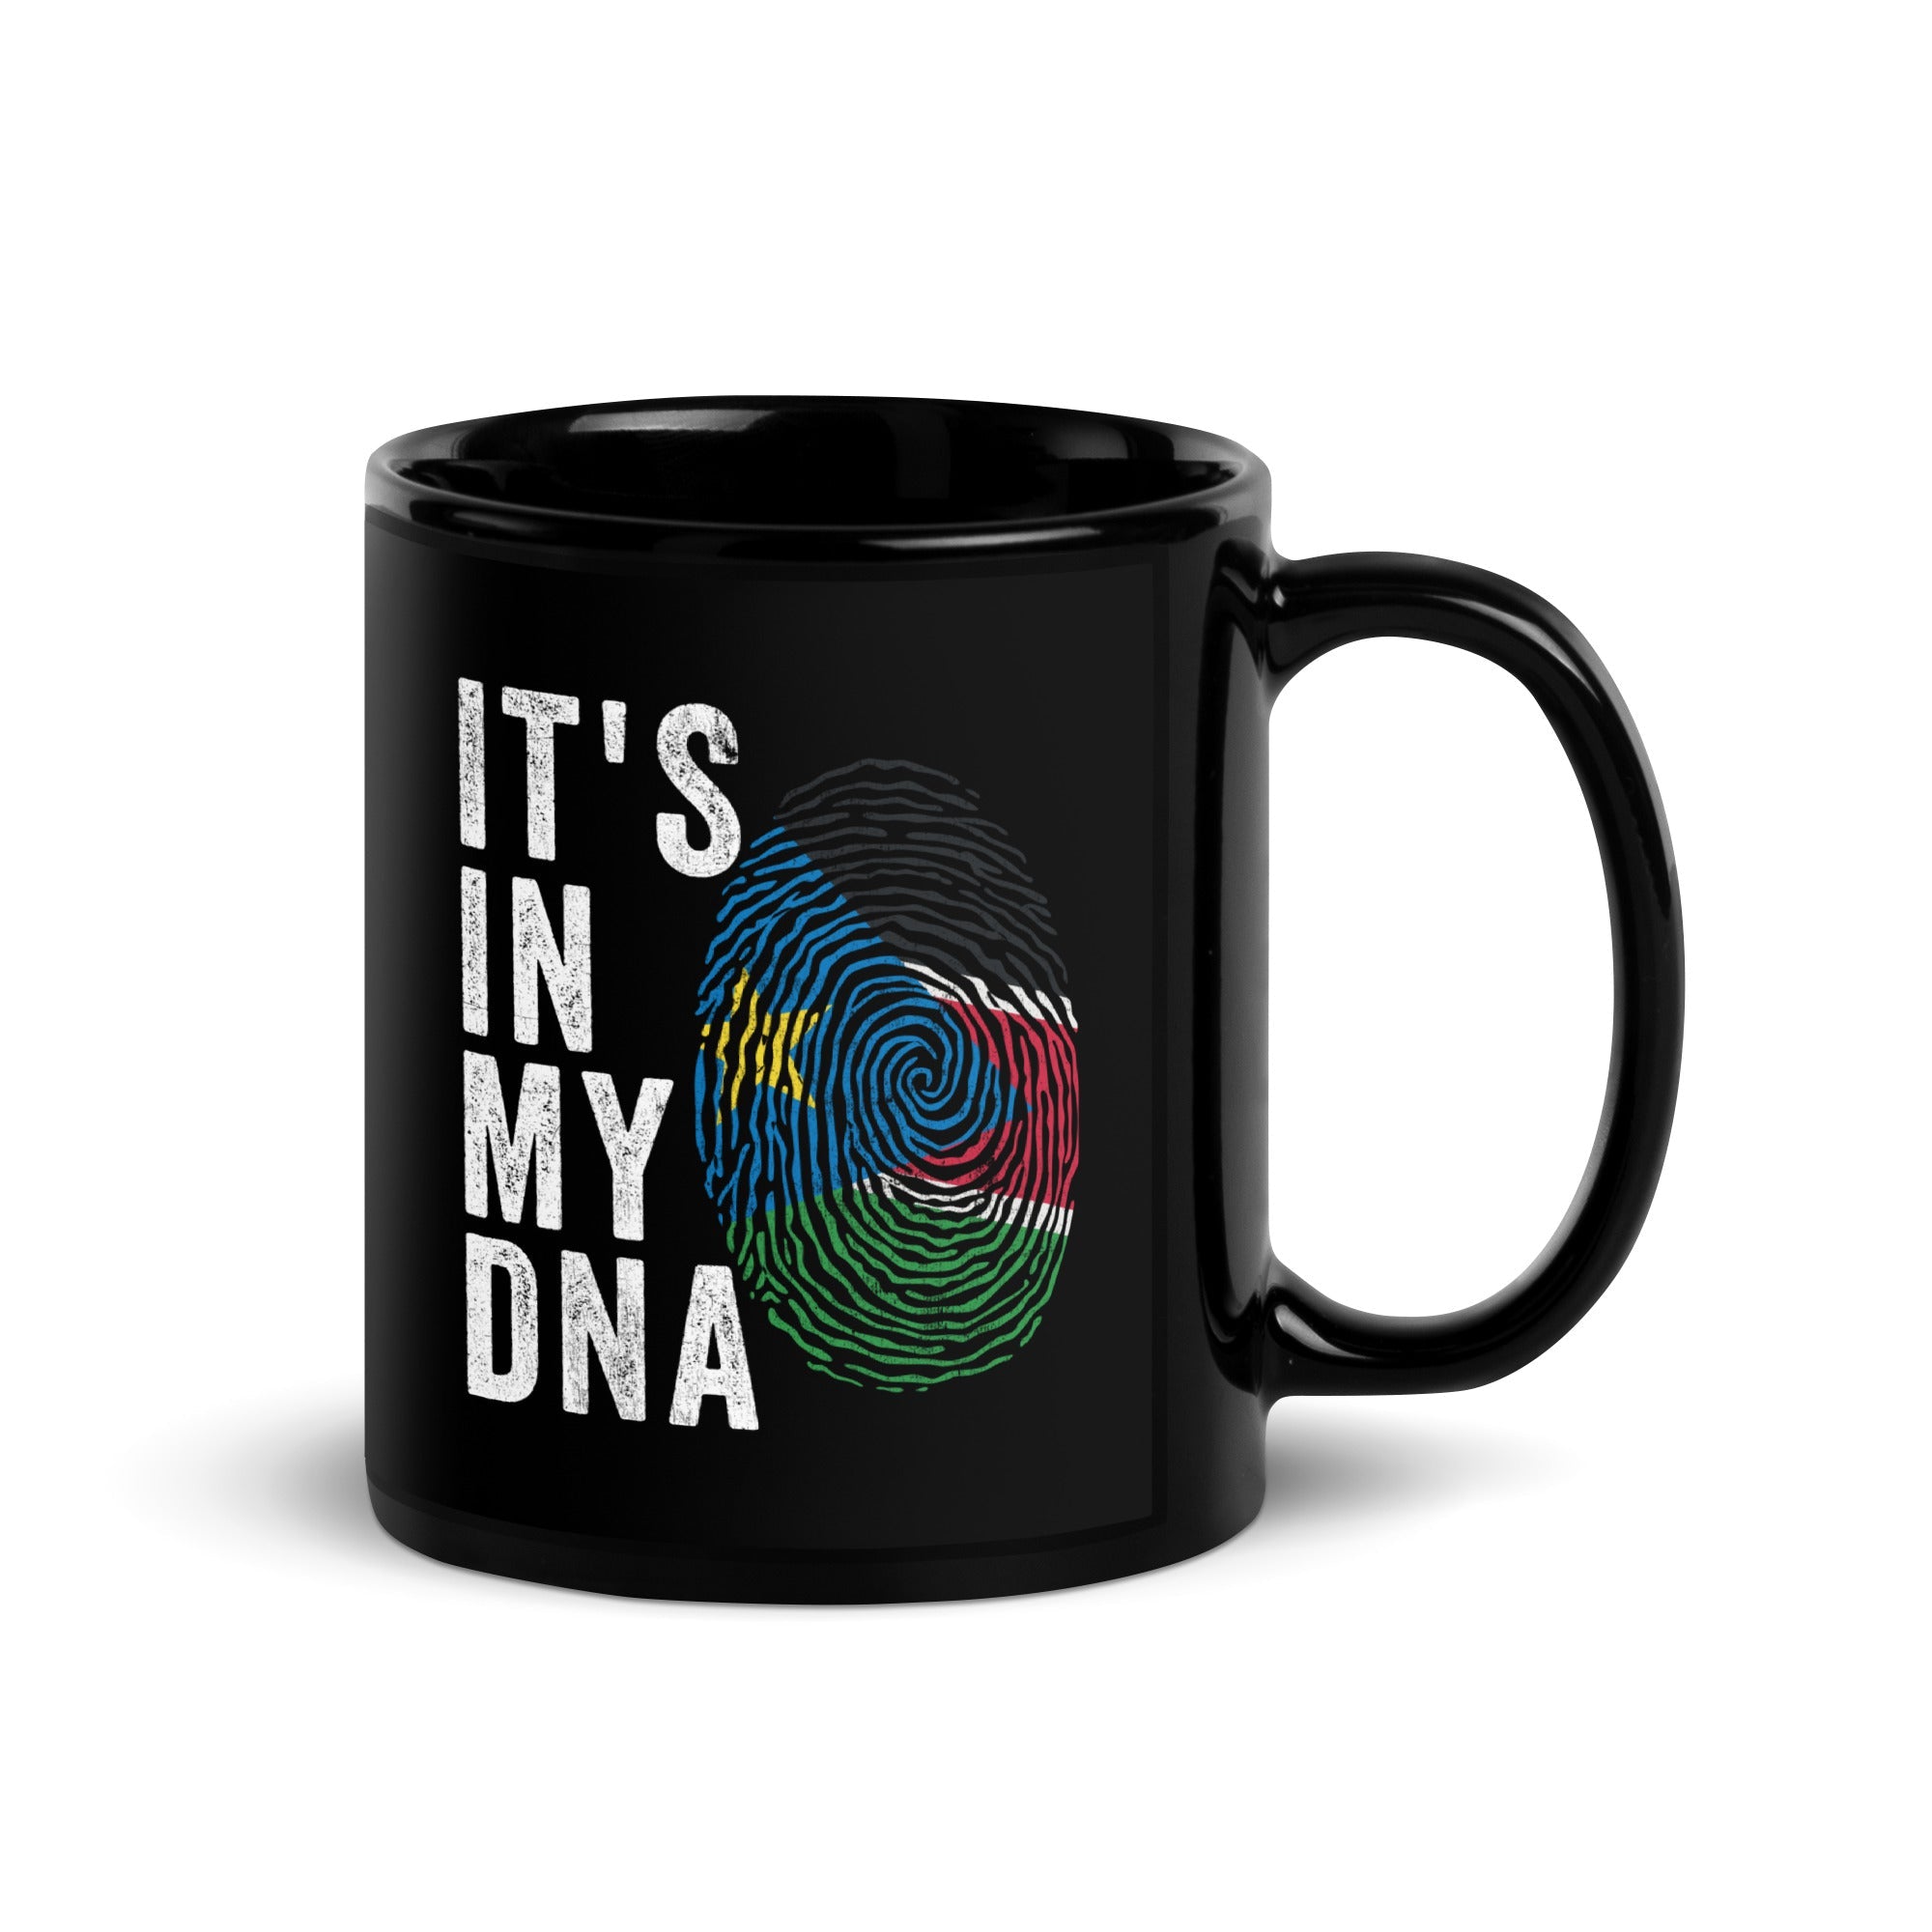 It's In My DNA - South Sudan Flag Mug